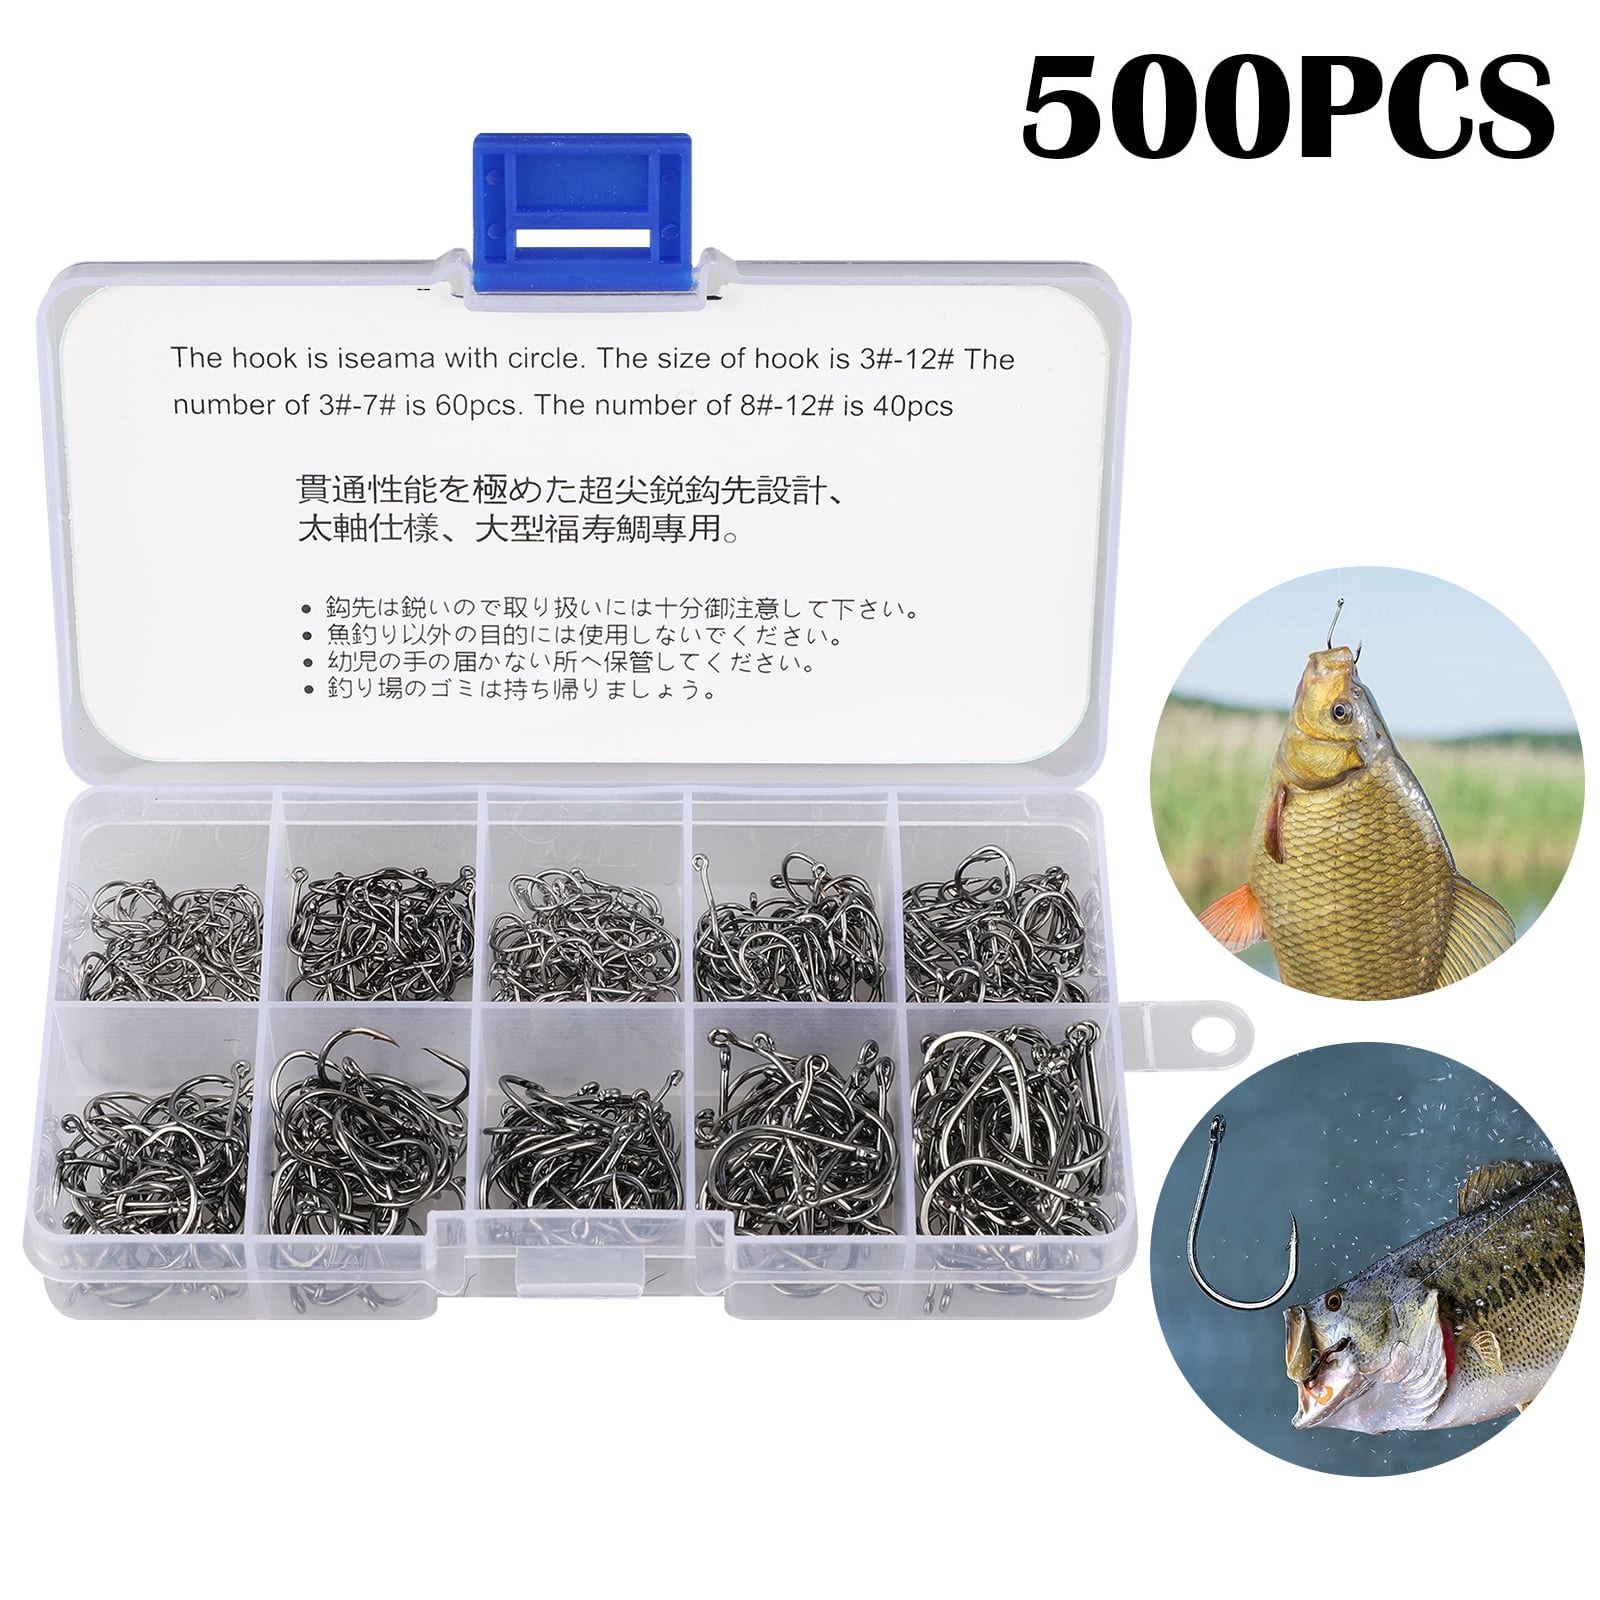 500pcs Fish Hooks 10 Sizes Fishing Black Silver Sharpened With Box Quality kit 